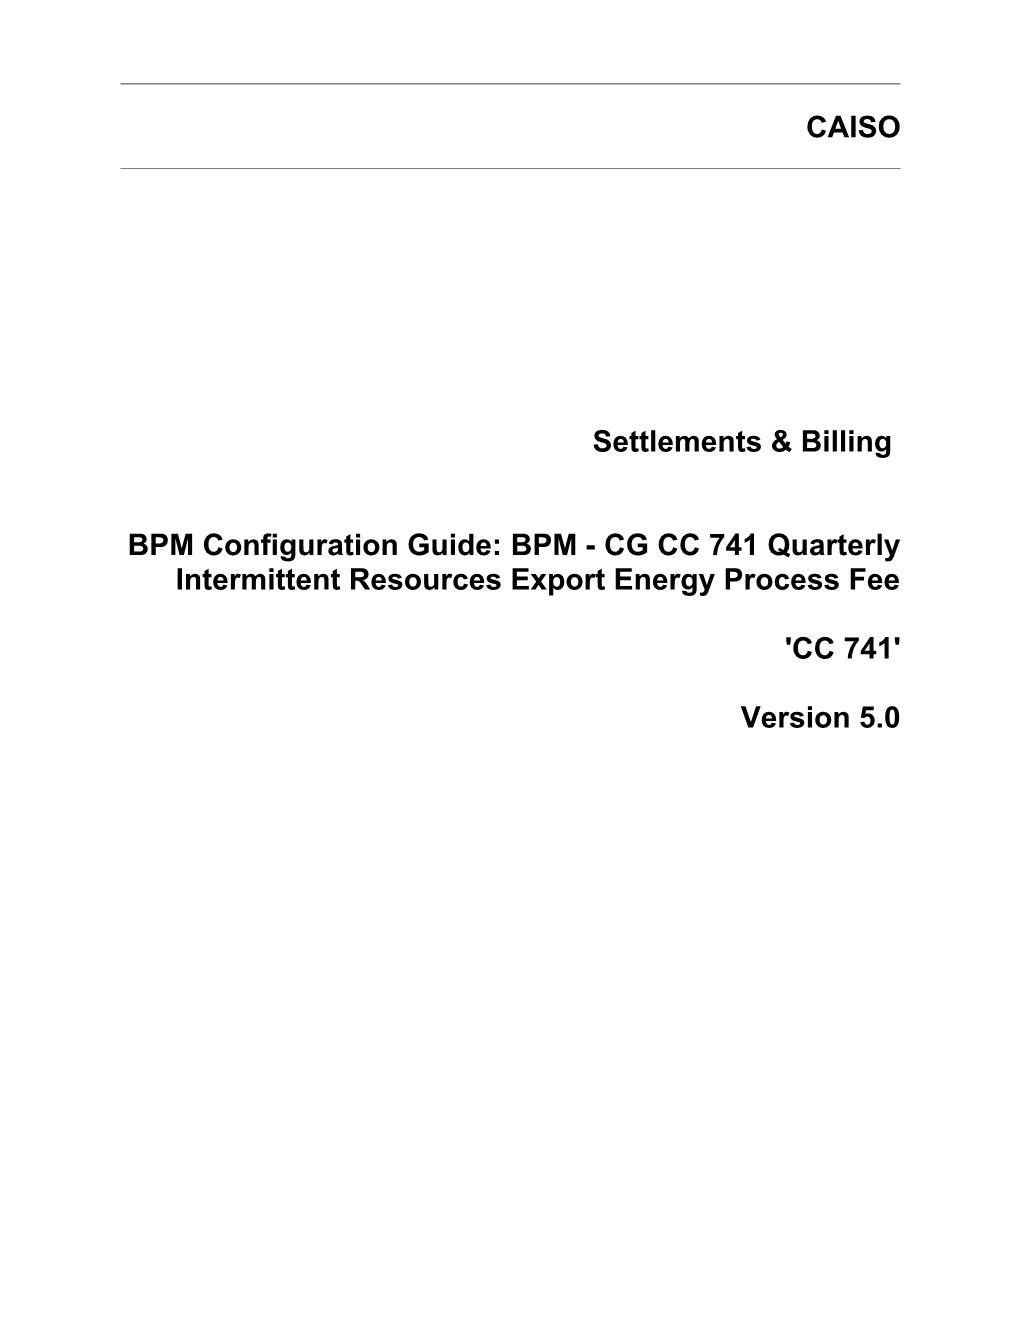 BPM - CG CC 741 Quarterly Intermittent Resources Export Energy Process Fee